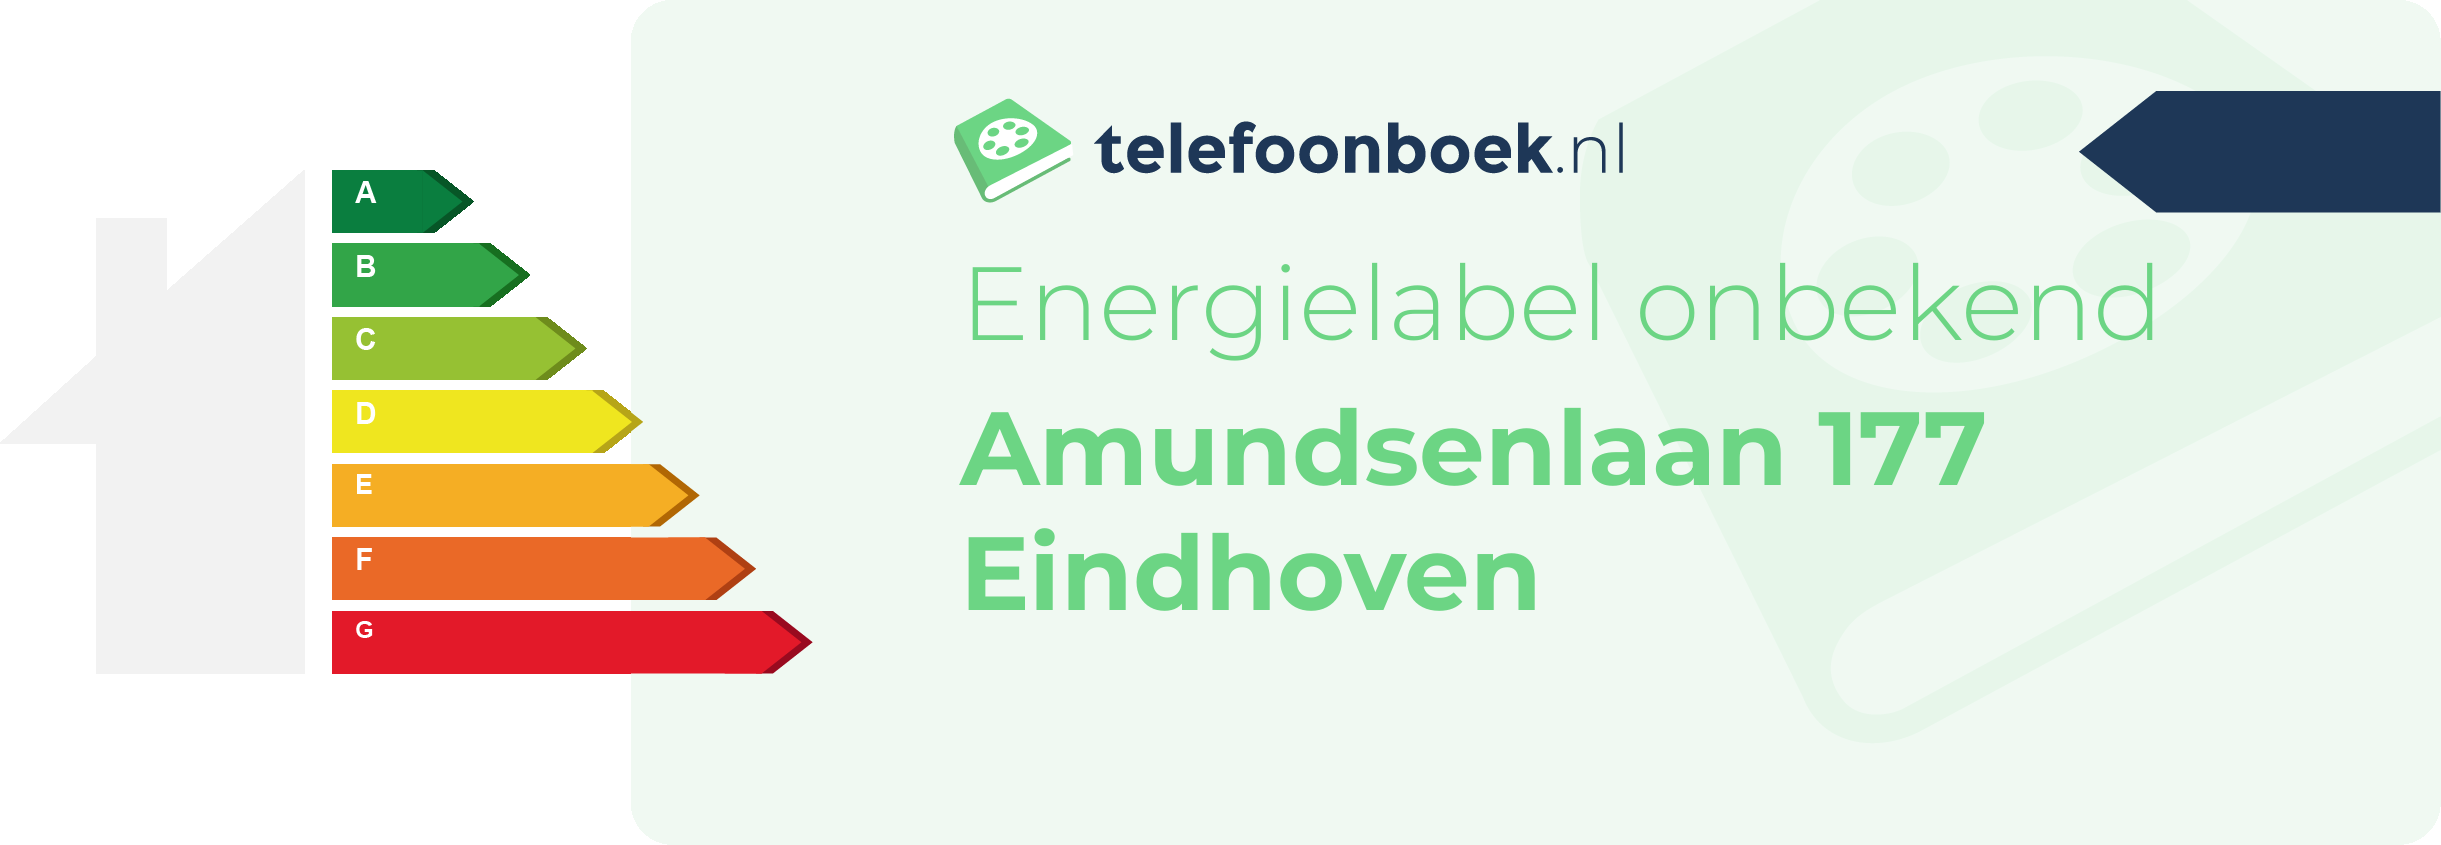 Energielabel Amundsenlaan 177 Eindhoven